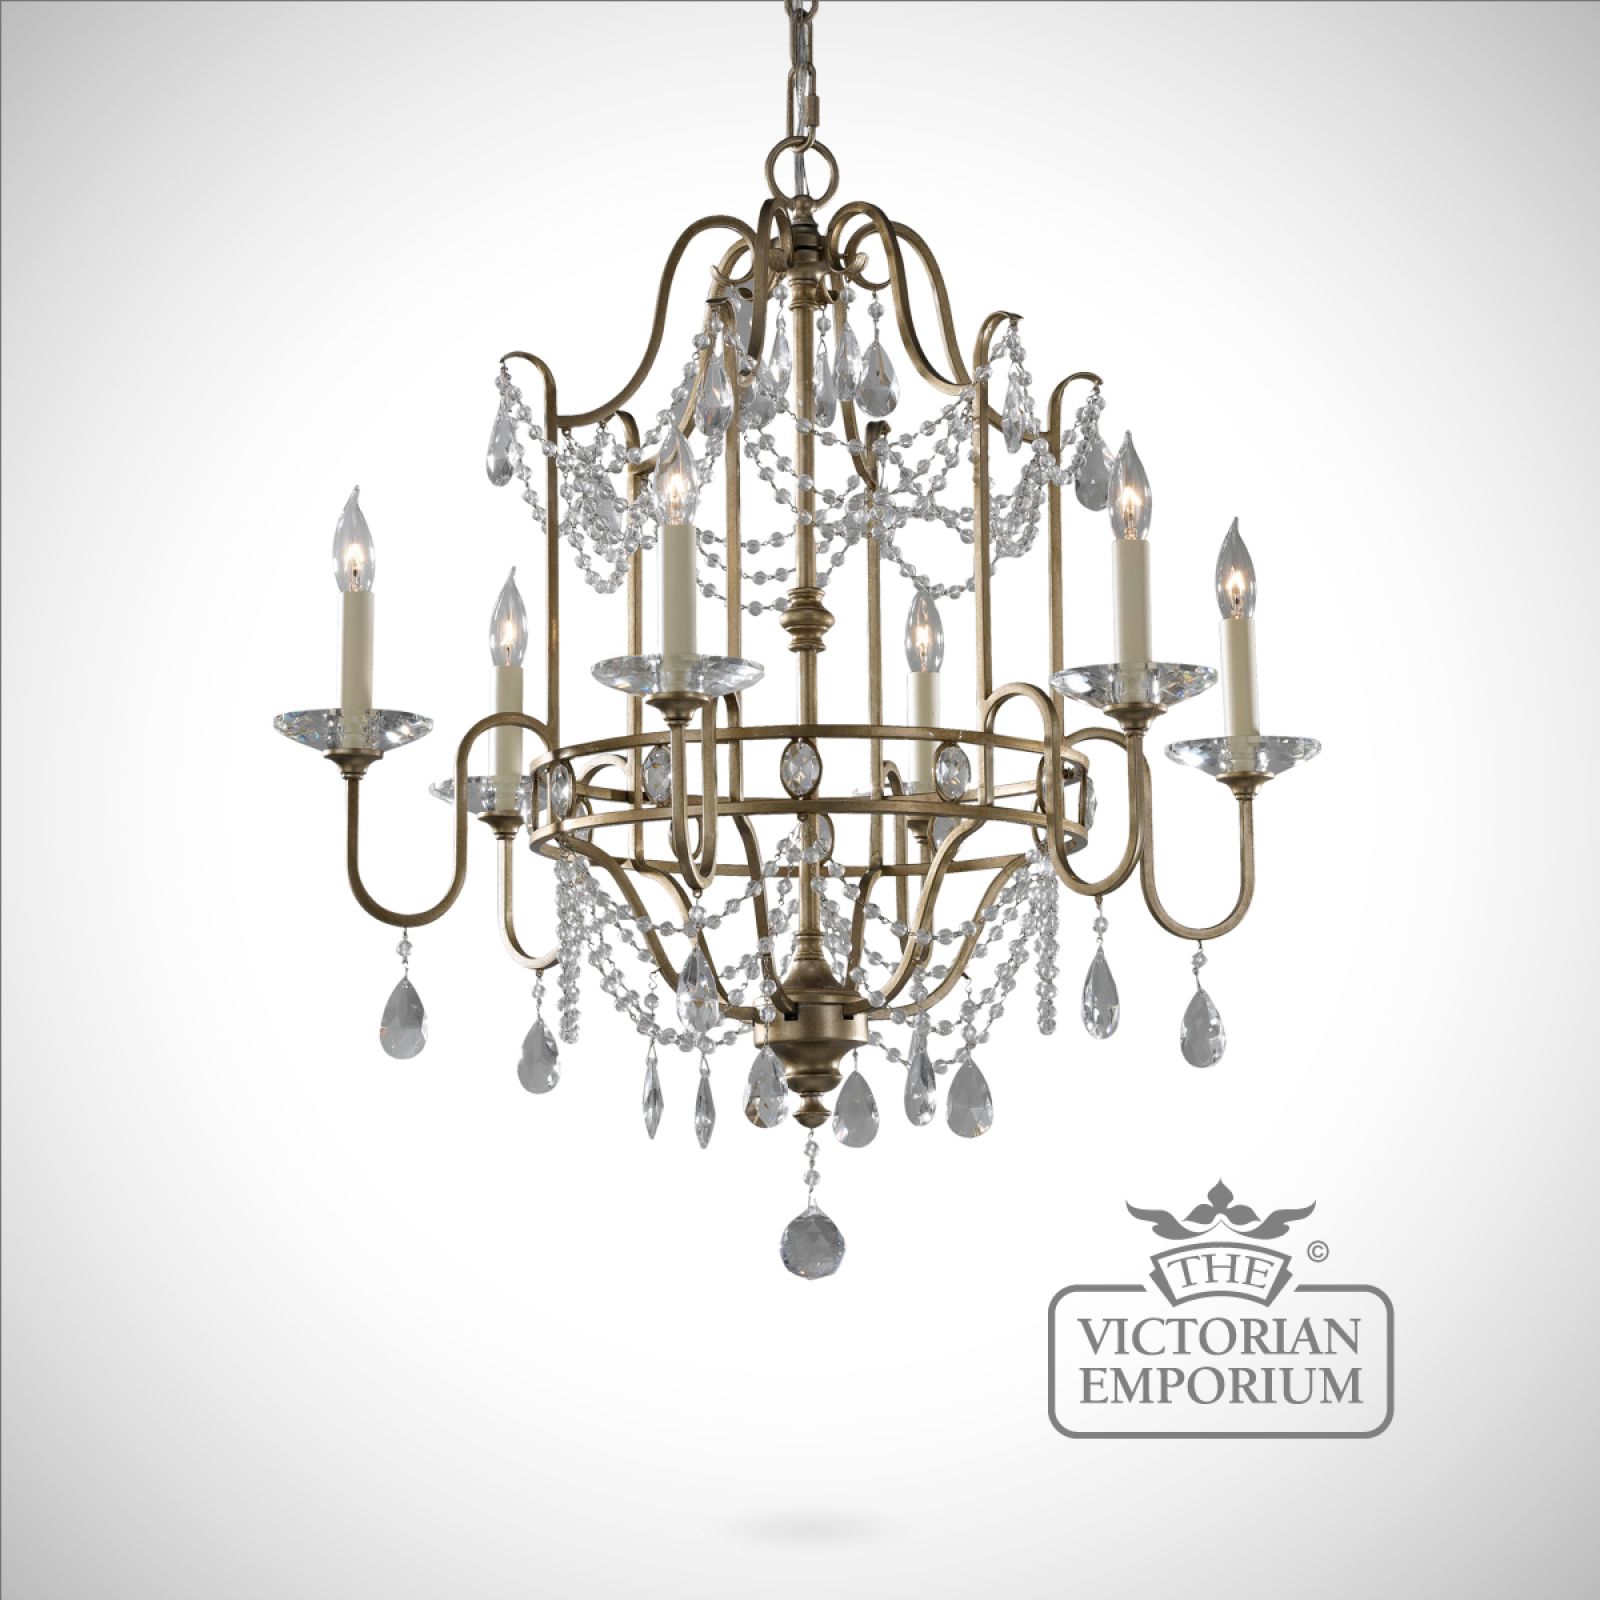 Gilded silver decorative 6 light chandelier